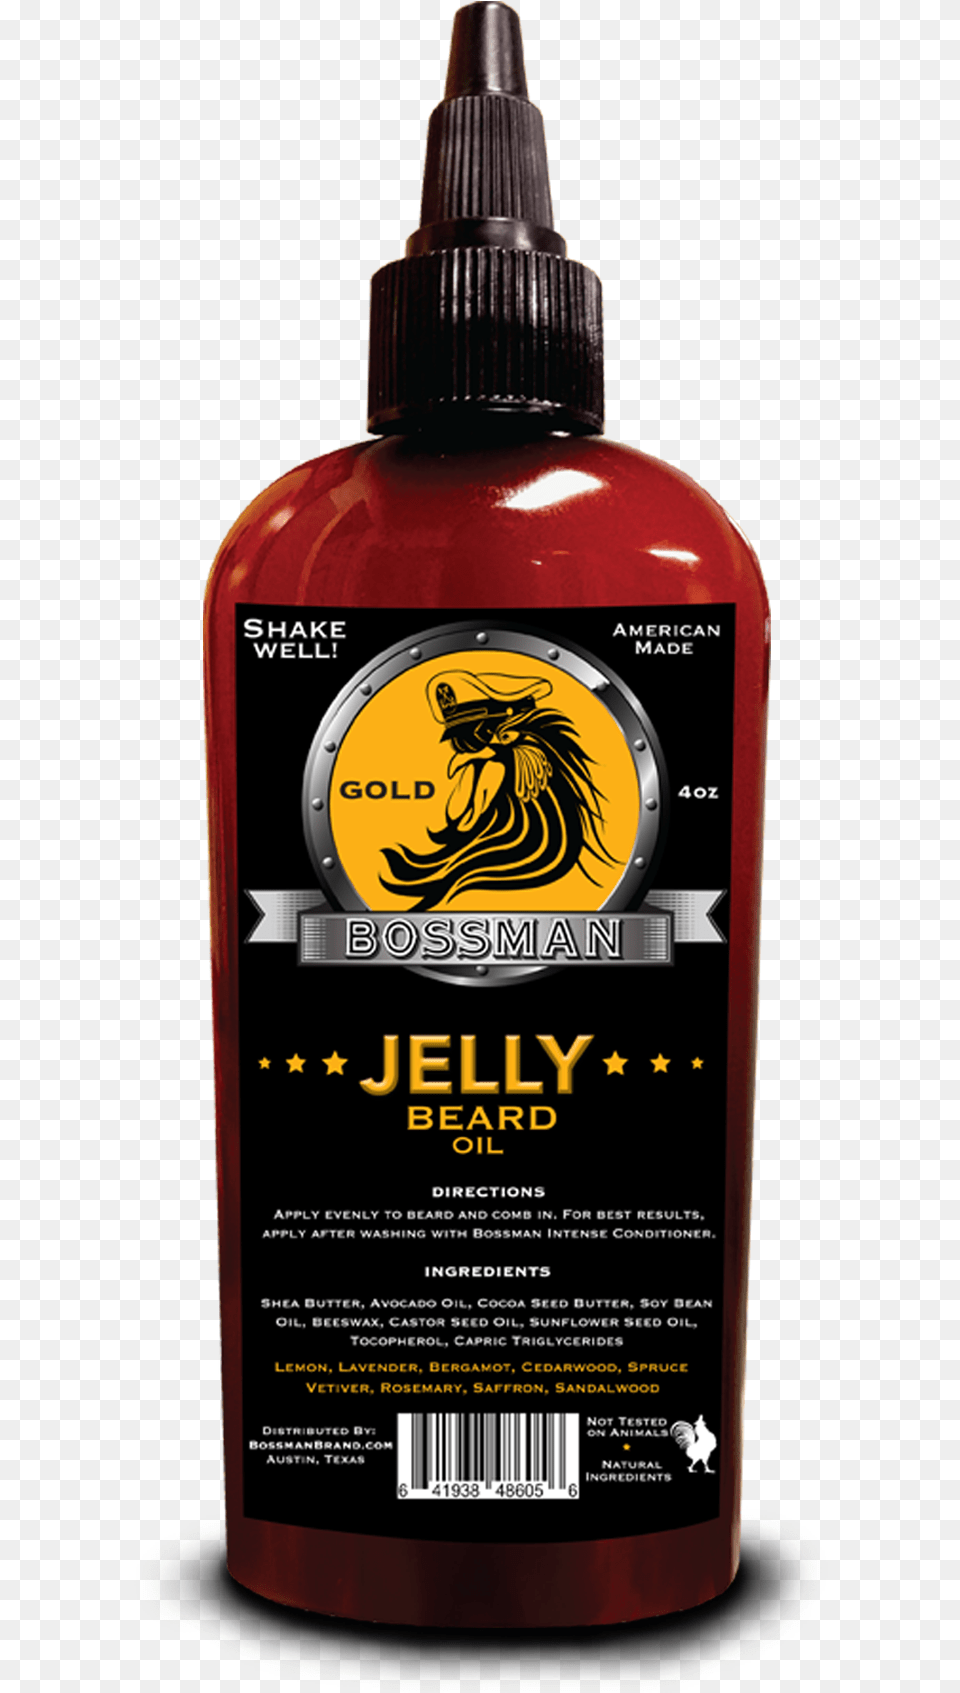 Jelly Beard Oil Bossman Jelly Beard Oil Gold, Bottle, Cosmetics, Perfume, Food Free Png Download